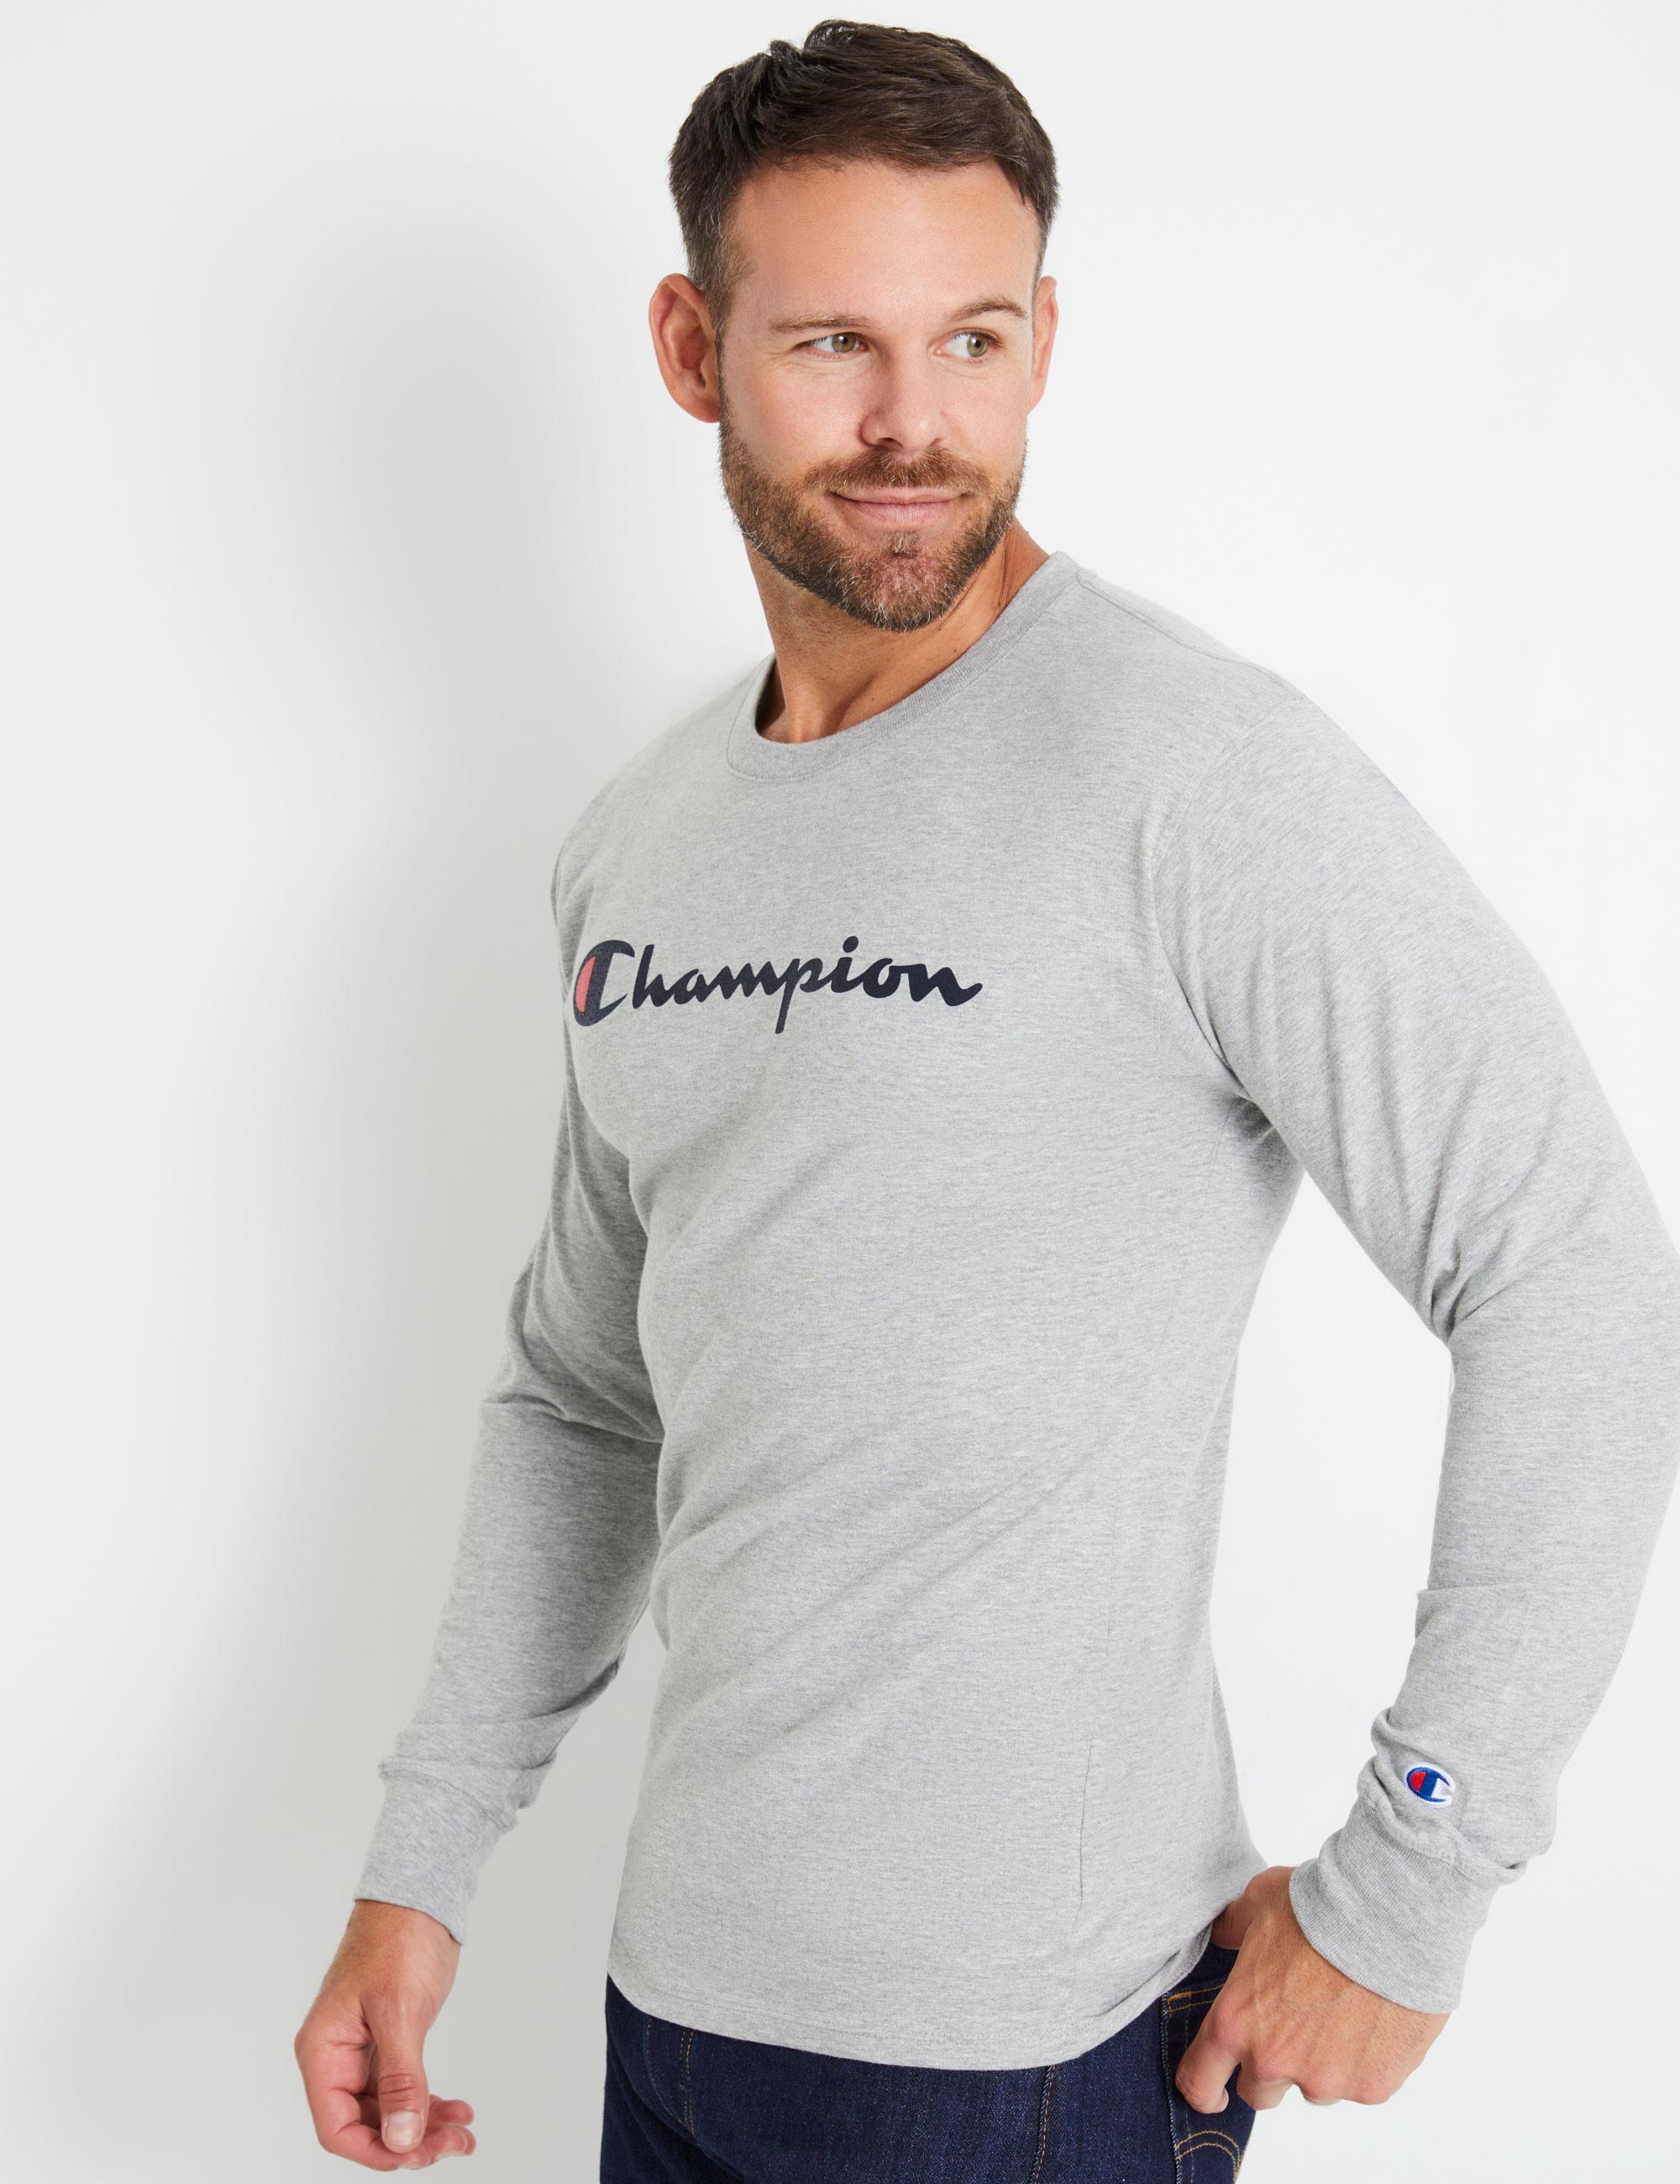 Champion - Mens Activewear - Classic Long Sleeve T-Shirt